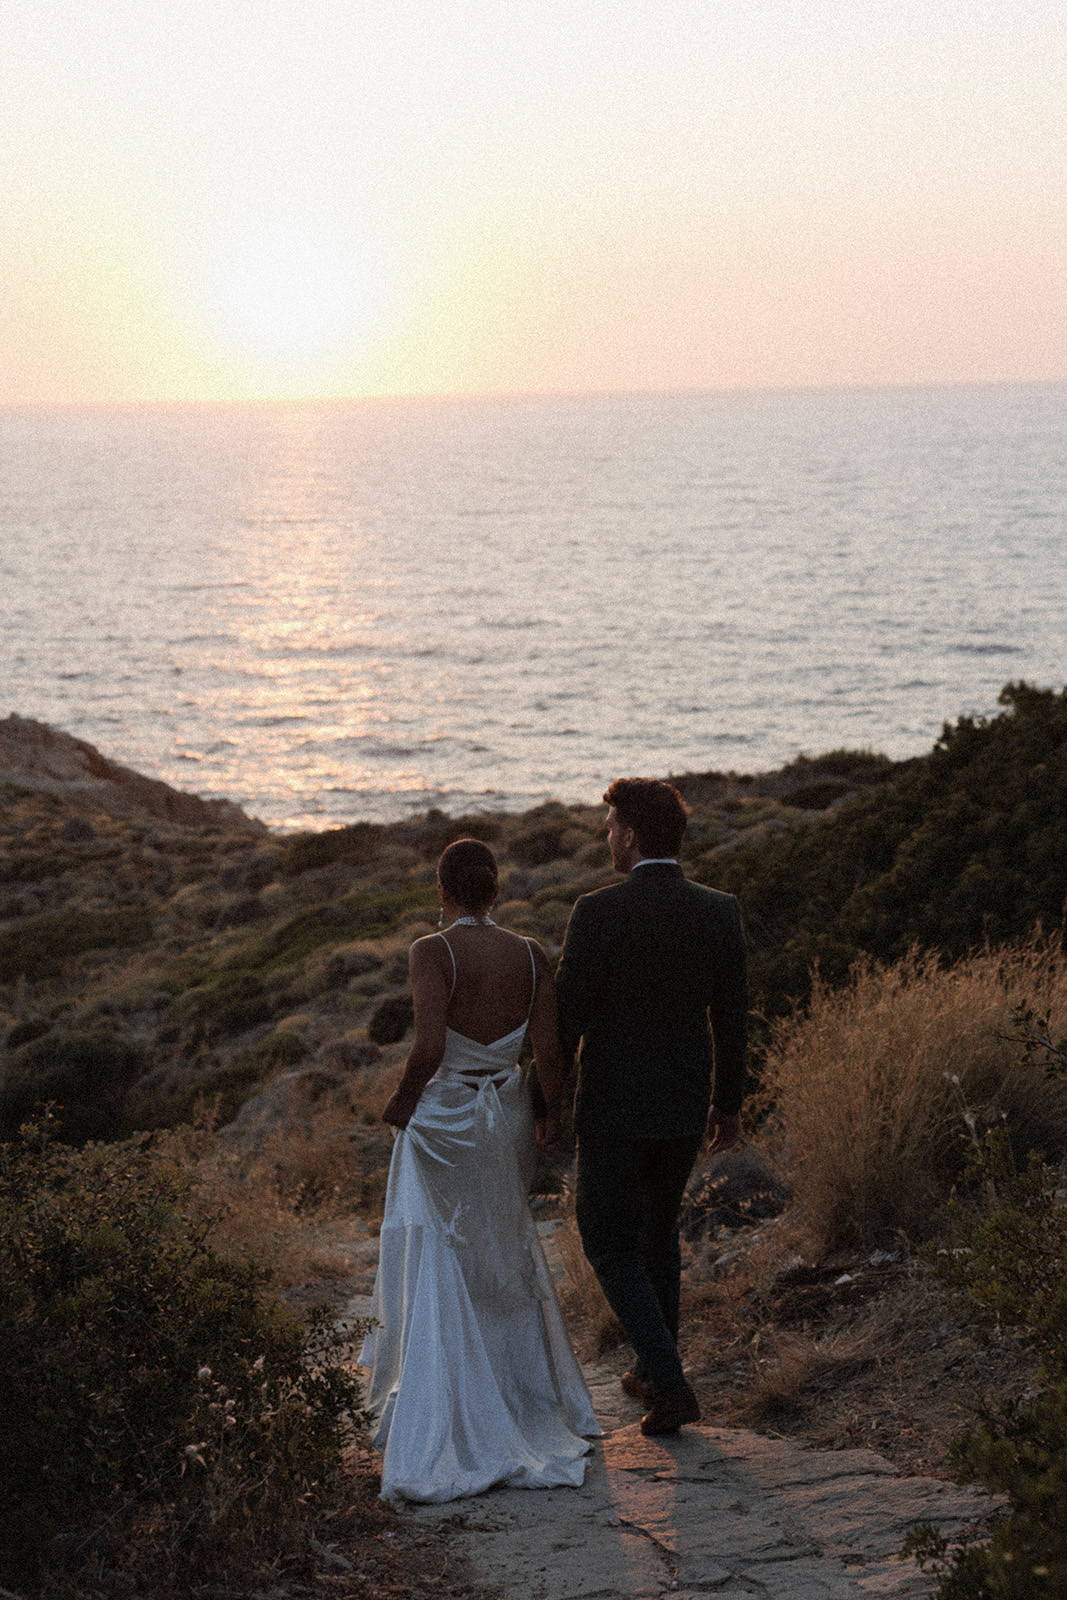 Bride and groom, enjoying the sunset